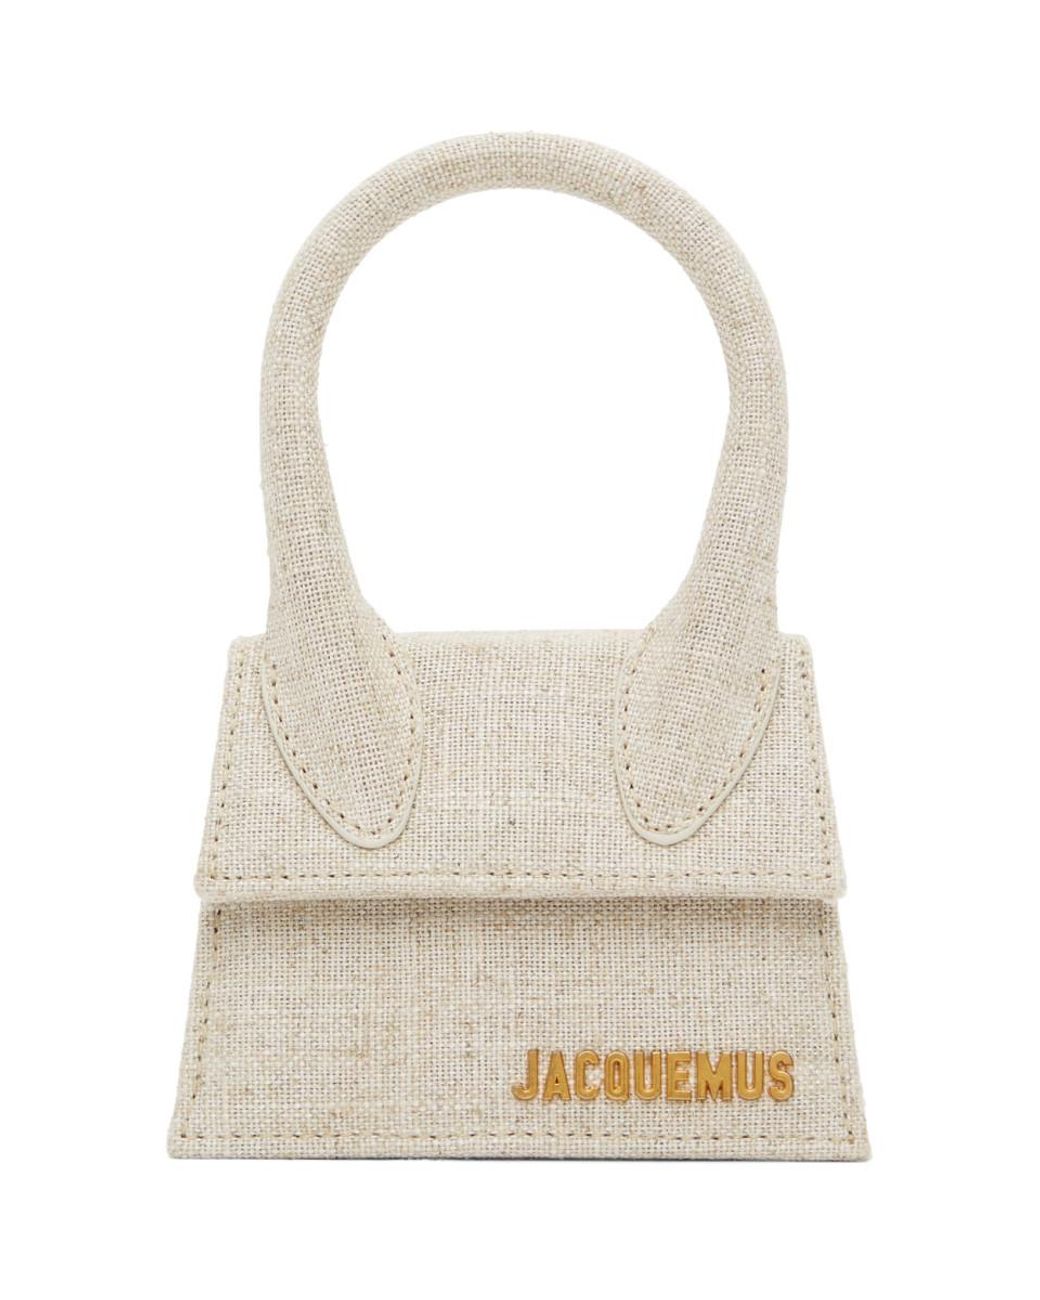 Jacquemus Le Chiquito Medium Linen Top Handle Bag in Natural | Lyst Canada